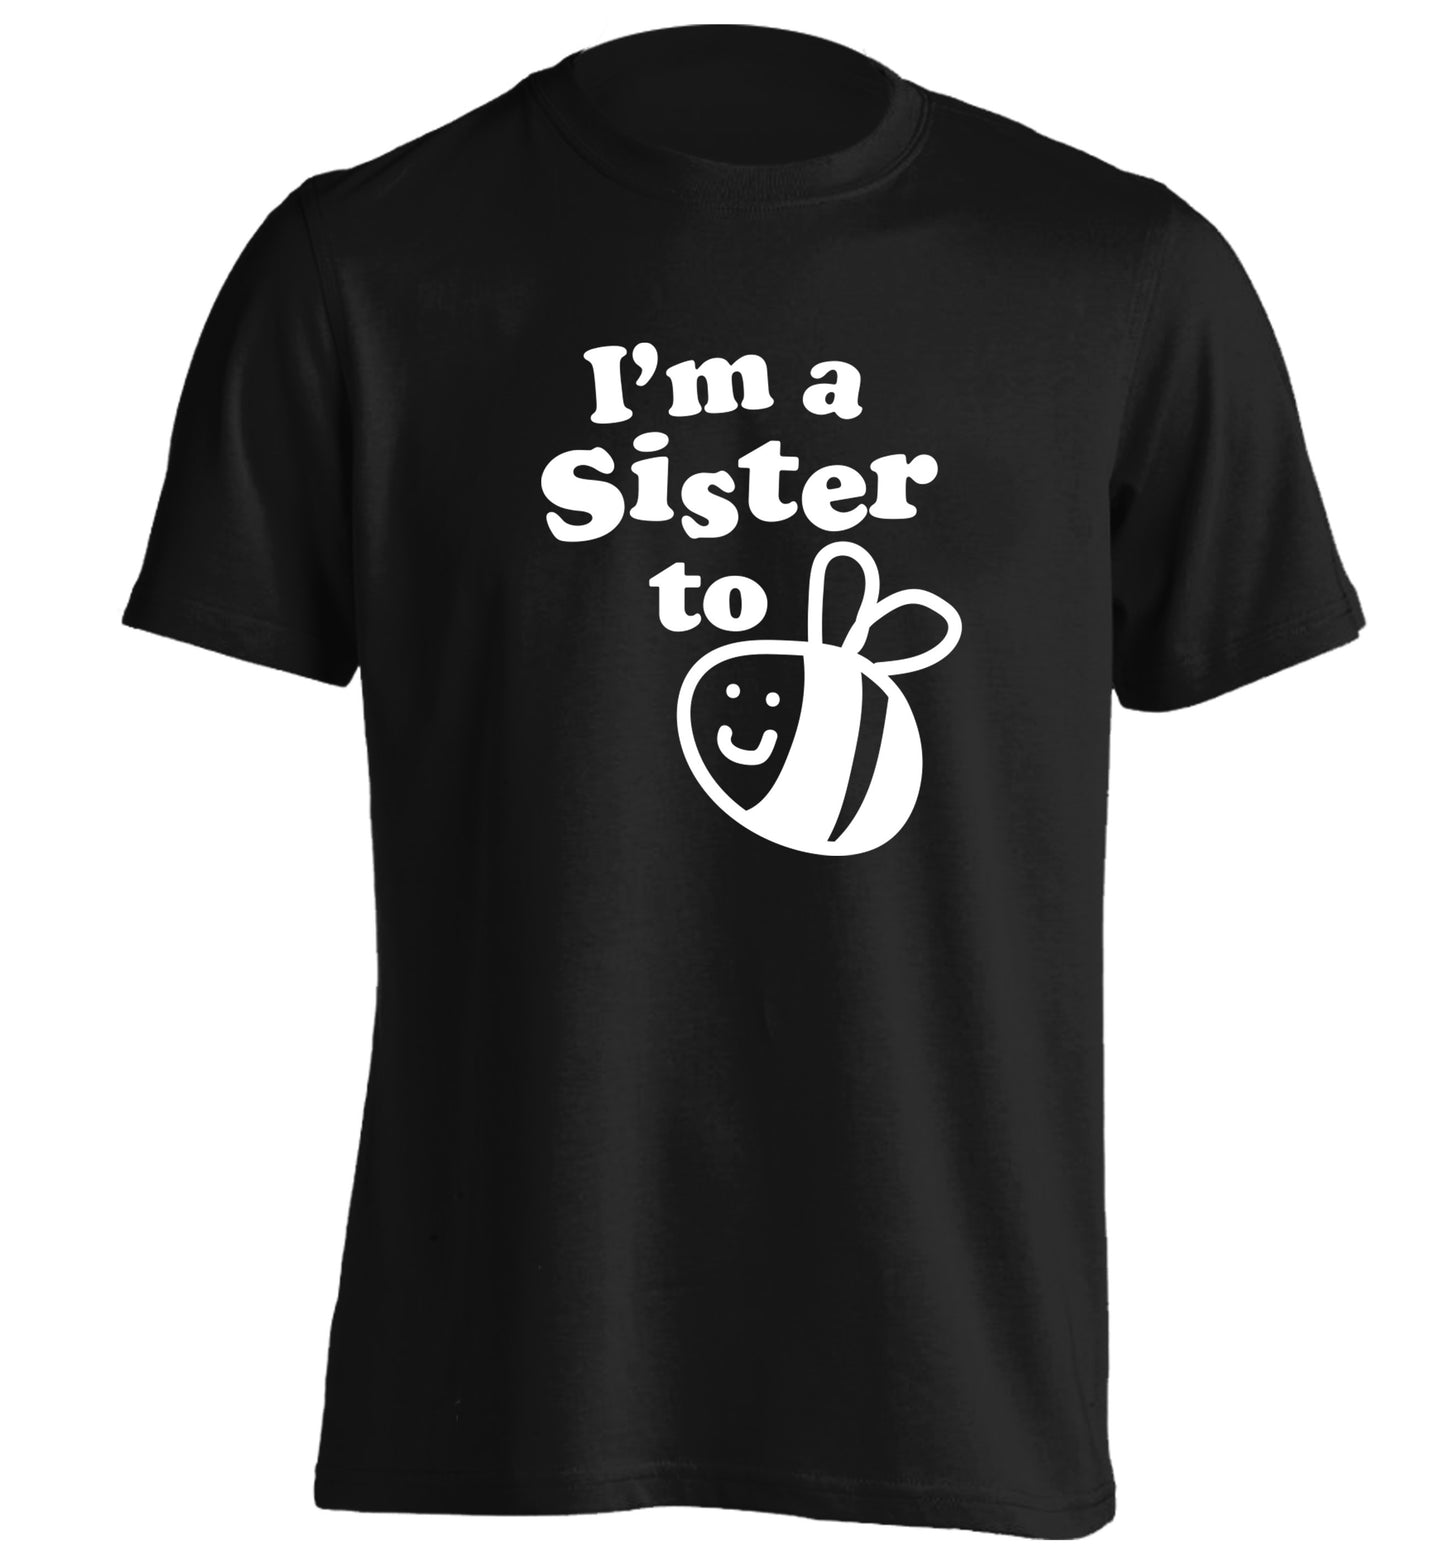 I'm a sister to be adults unisex black Tshirt 2XL